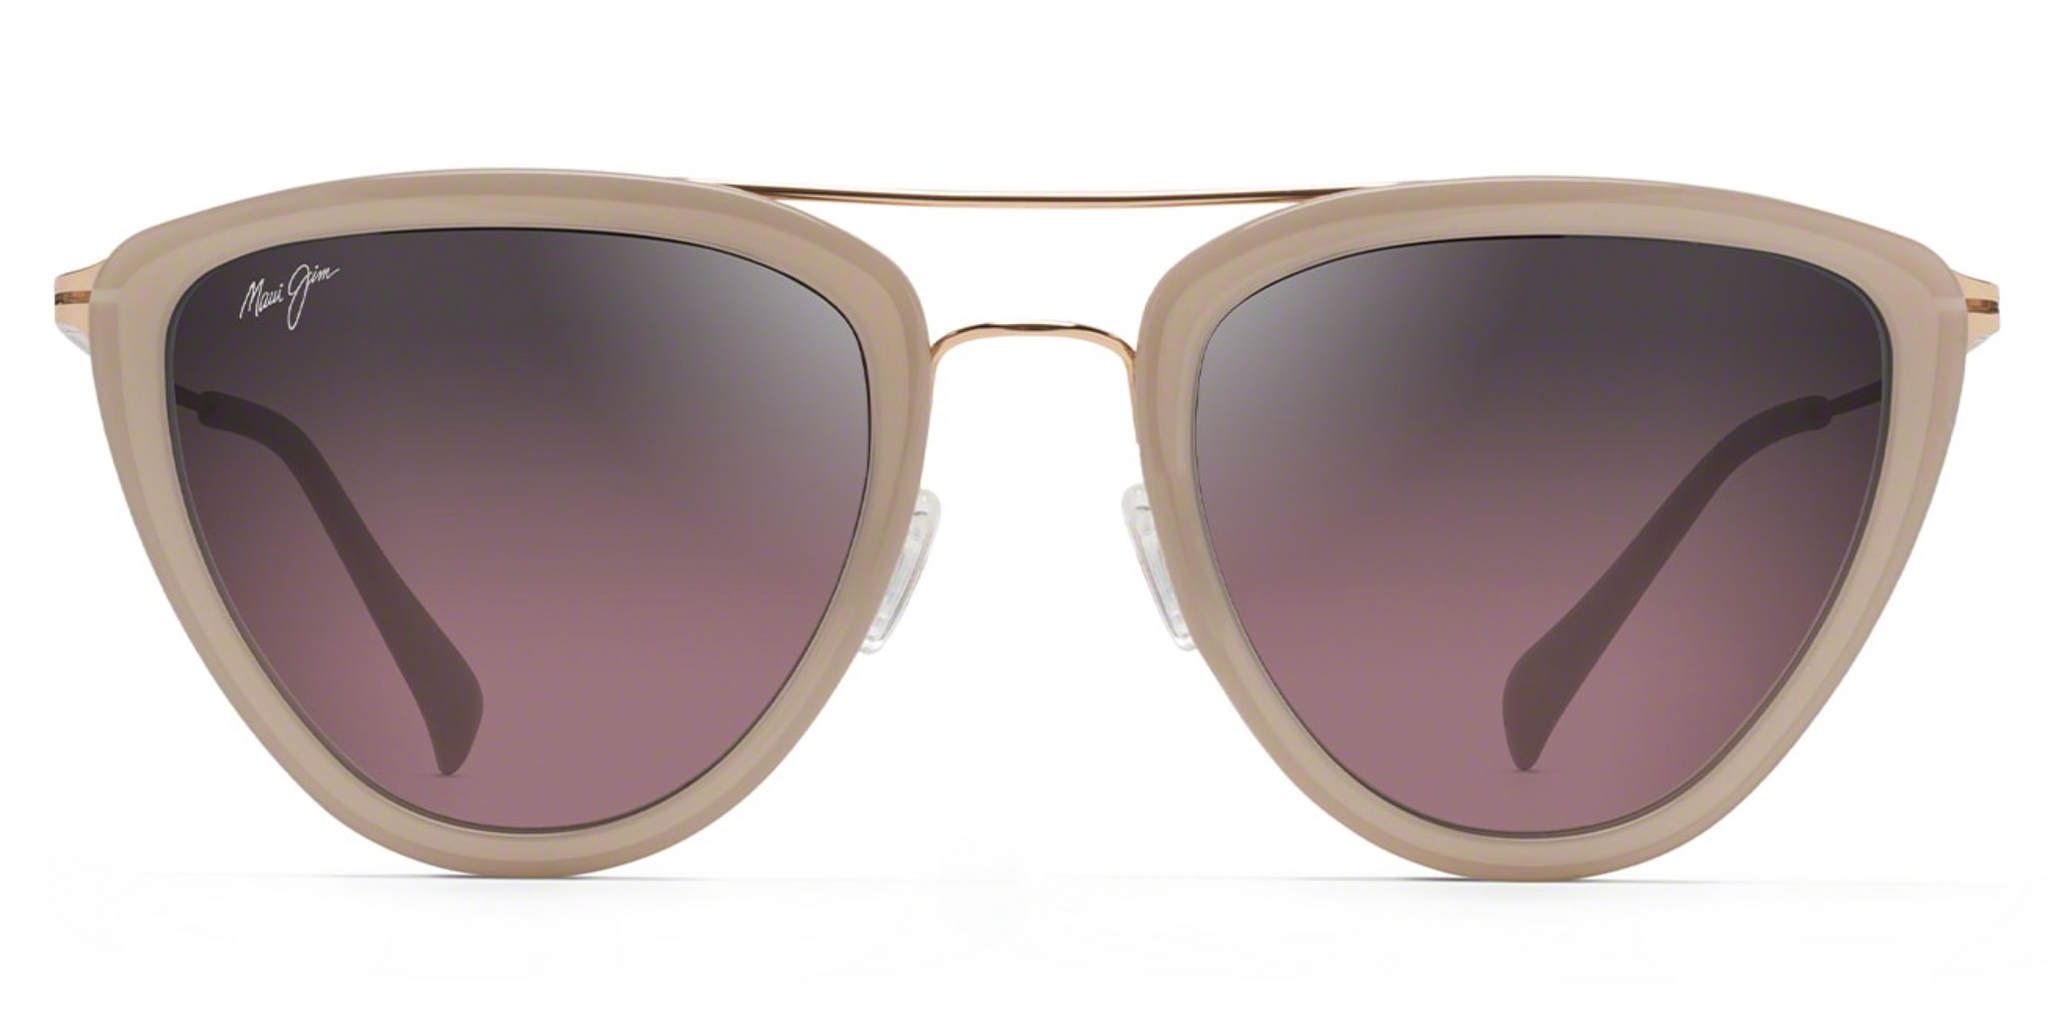 Maui RS331-05 Models: - Hunakai Sunglasses Sunglasses: Flight Jim 331 HS331-10, GS331-02,